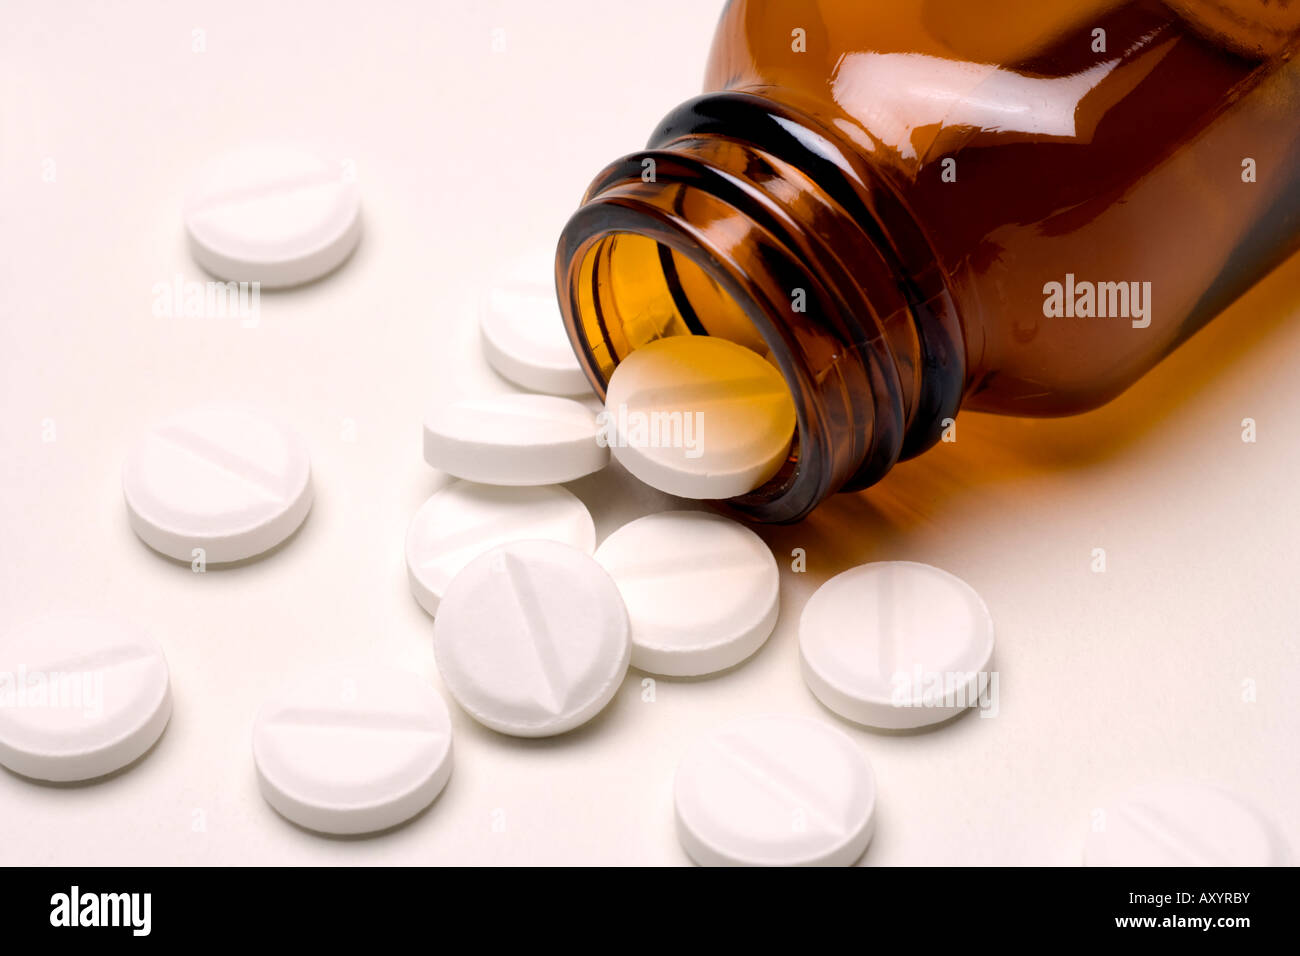 Pills drugs or tablets spilling out of a brown glass medicine bottle aspirin or paracetamol Stock Photo